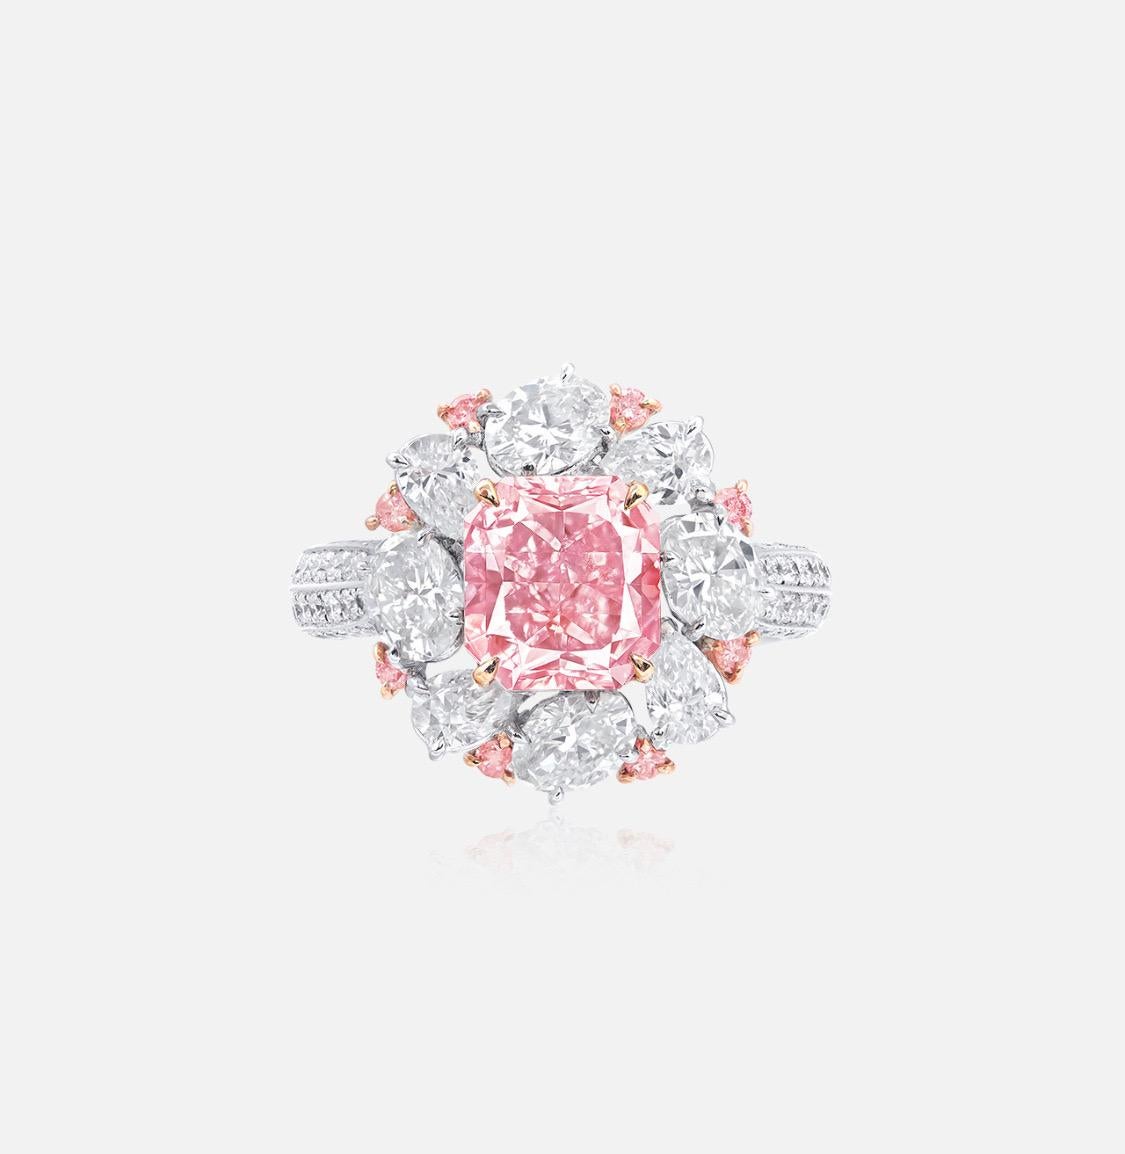 Cushion Cut Emilio Jewelry Gia Certified Internally Flawless Pink Diamond Ring  For Sale